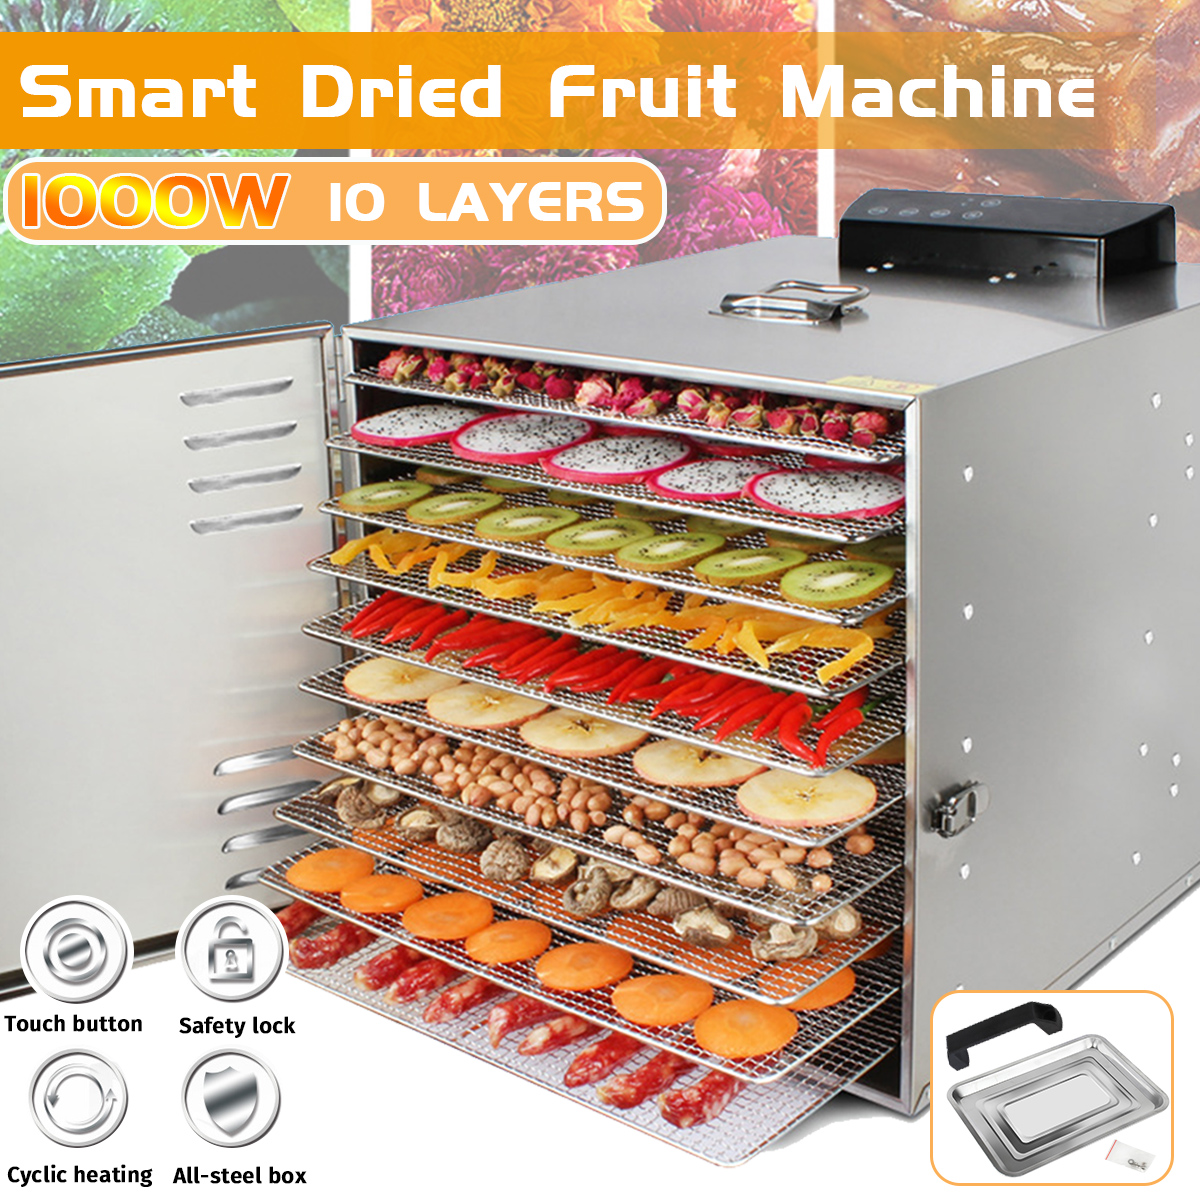 Food-Dehydrator-220V-1000W-Stainless-Steel-Yogurt-Fruit-Dryer-USEUAU-Plug-1759407-1